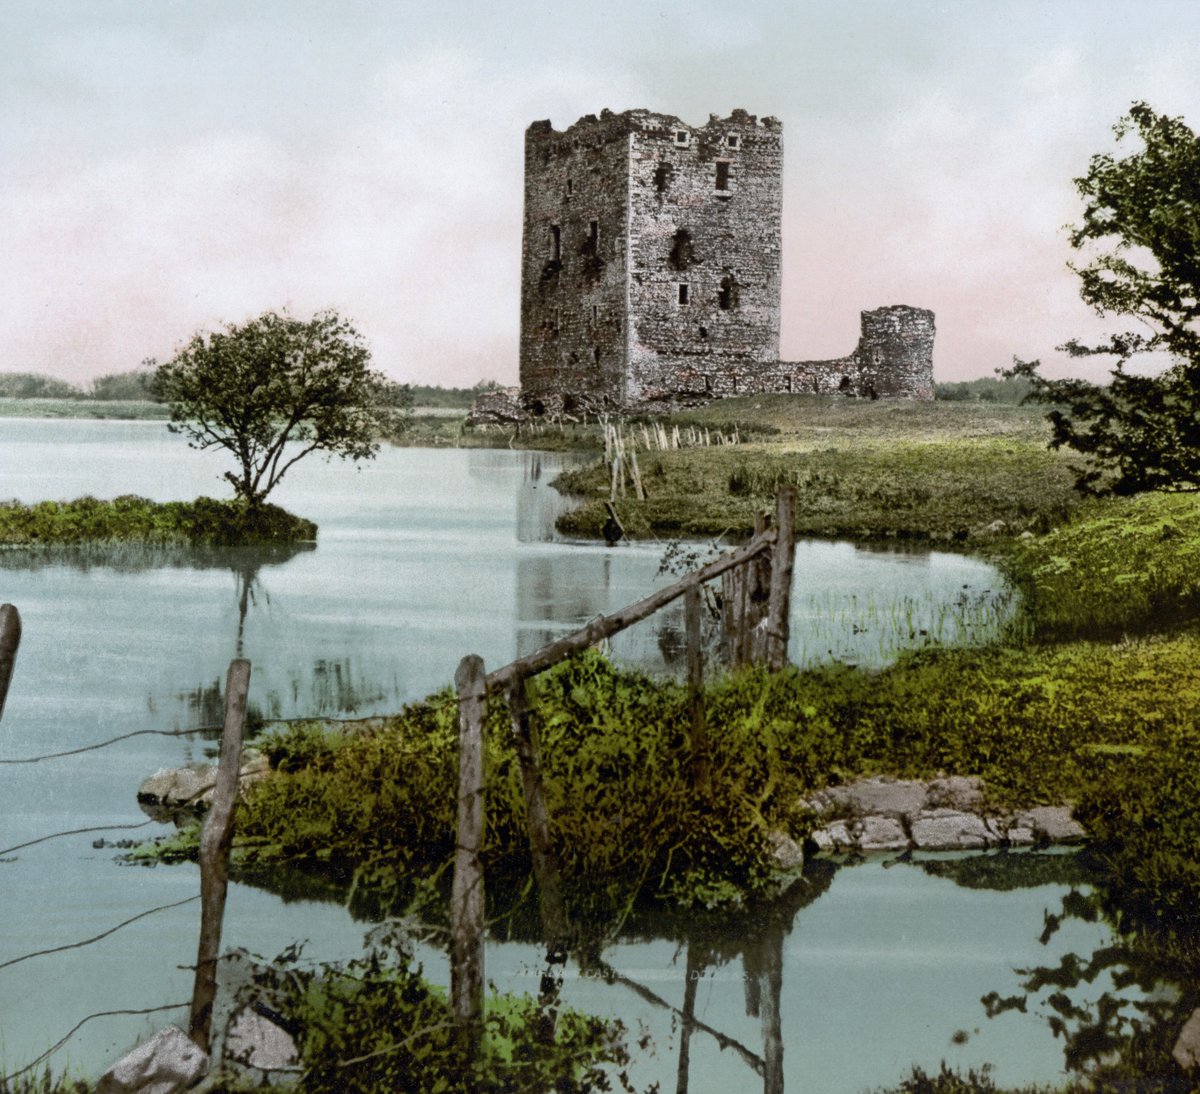 Threave Castle, Scotland (c. 1890) 🏴󠁧󠁢󠁳󠁣󠁴󠁿 

#Scotland #britishempire #19thcentury #oldscotland #Alba